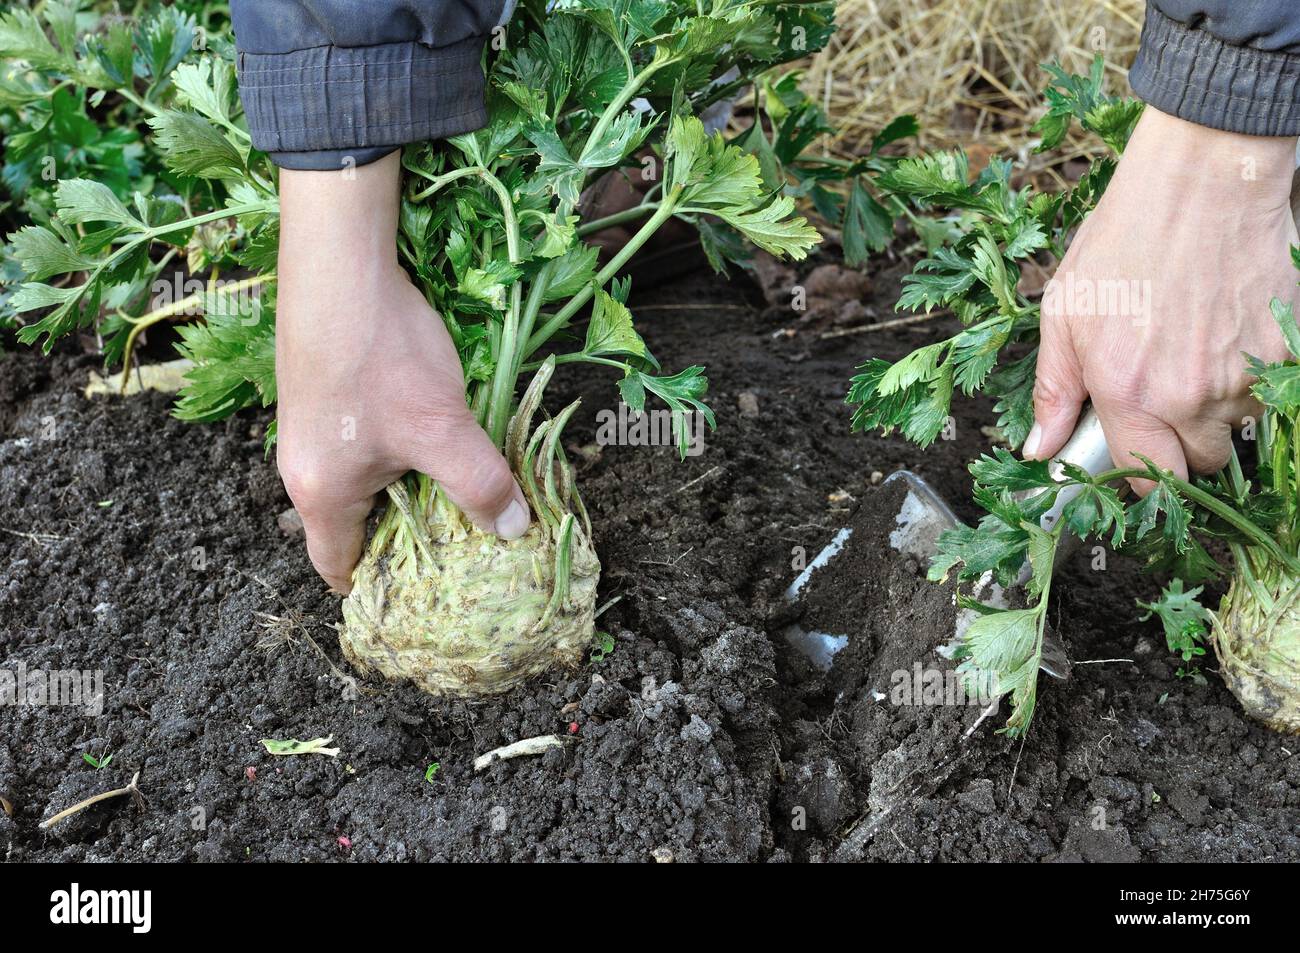 Gärtner erntet reifen Sellerie (Wurzelgemüse) im Gemüsegarten Stockfoto